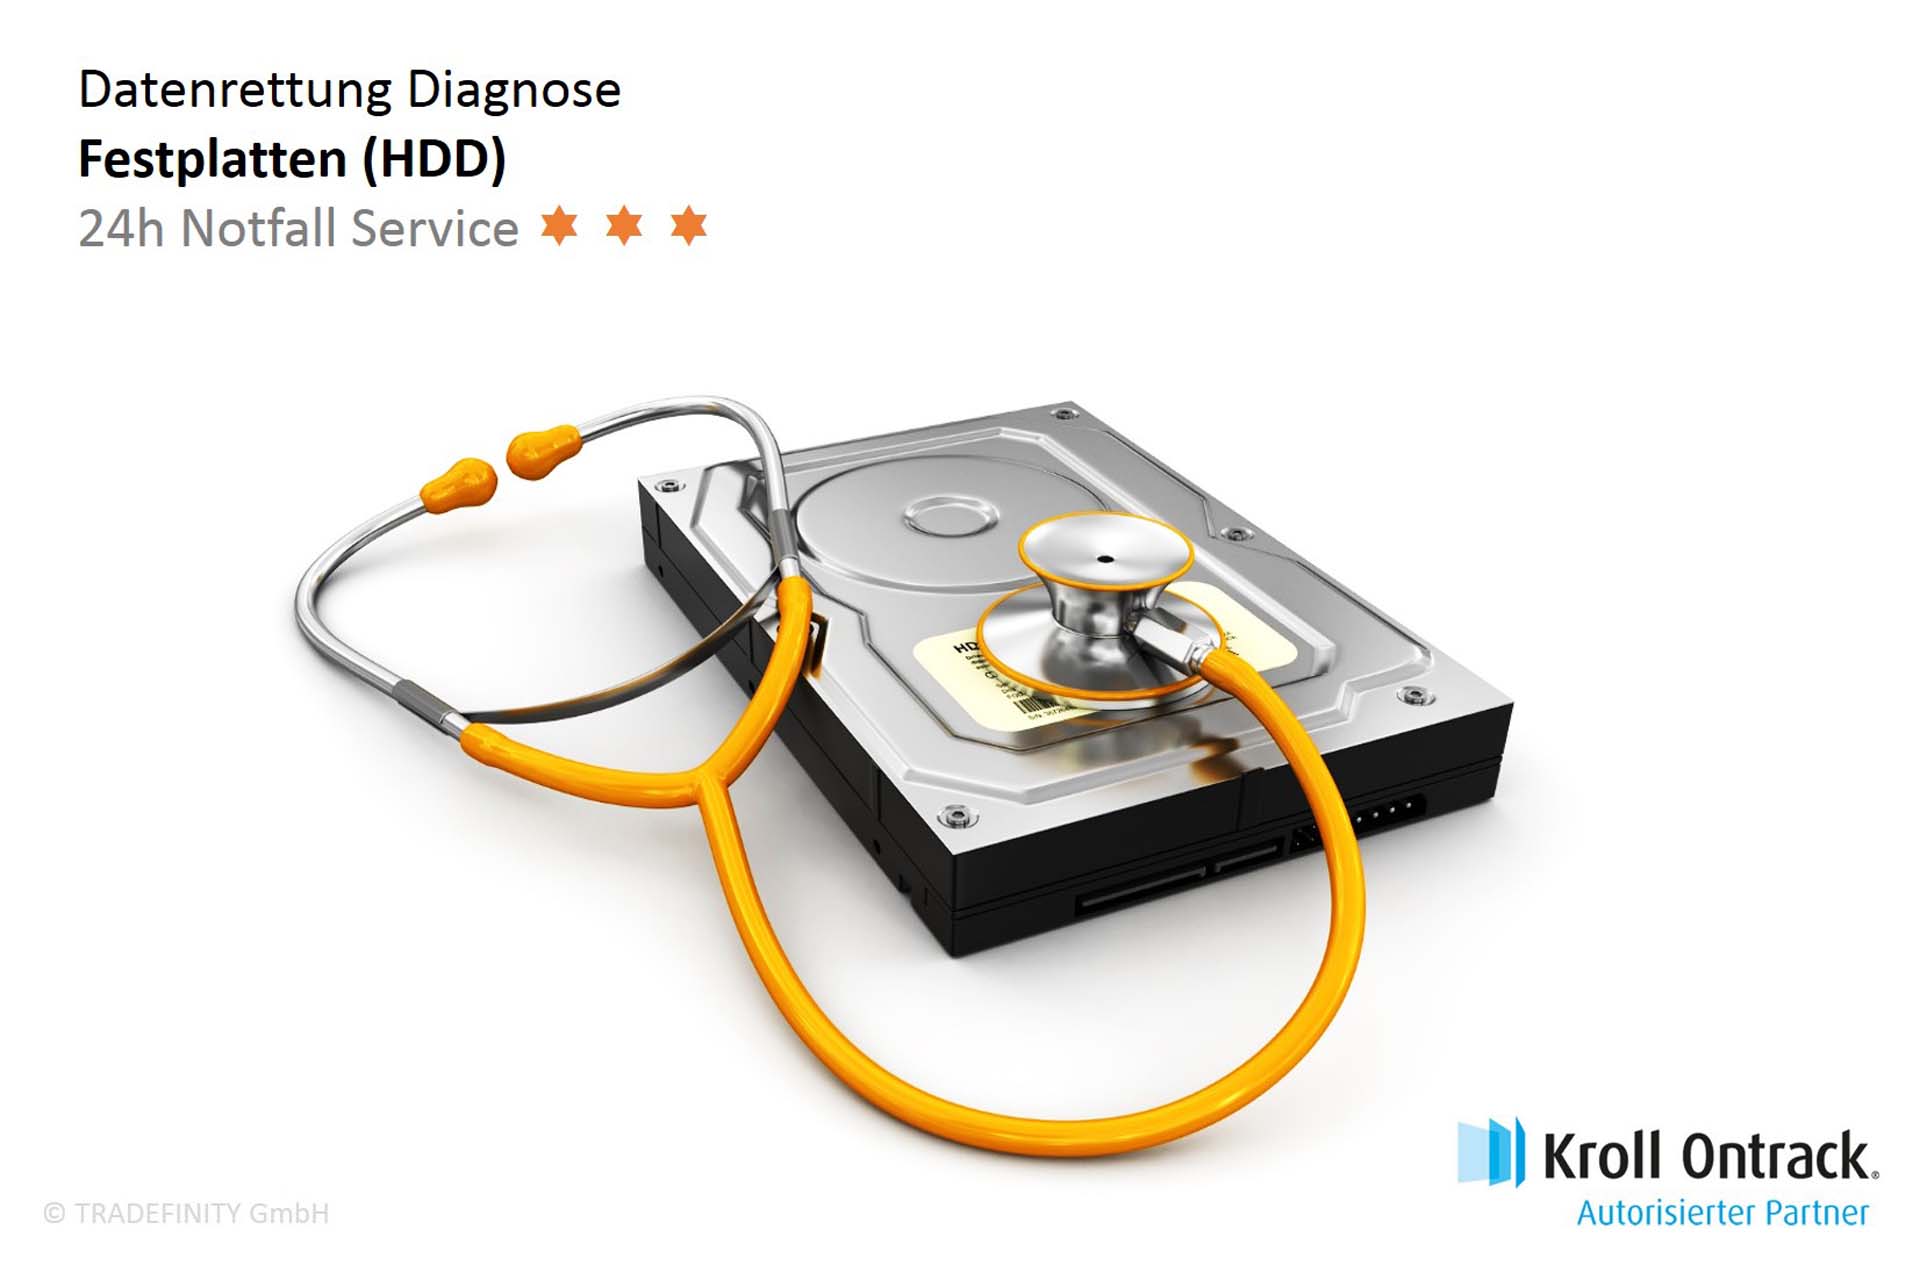 Datenrettung Diagnose (24h Notfall Service) von HDD